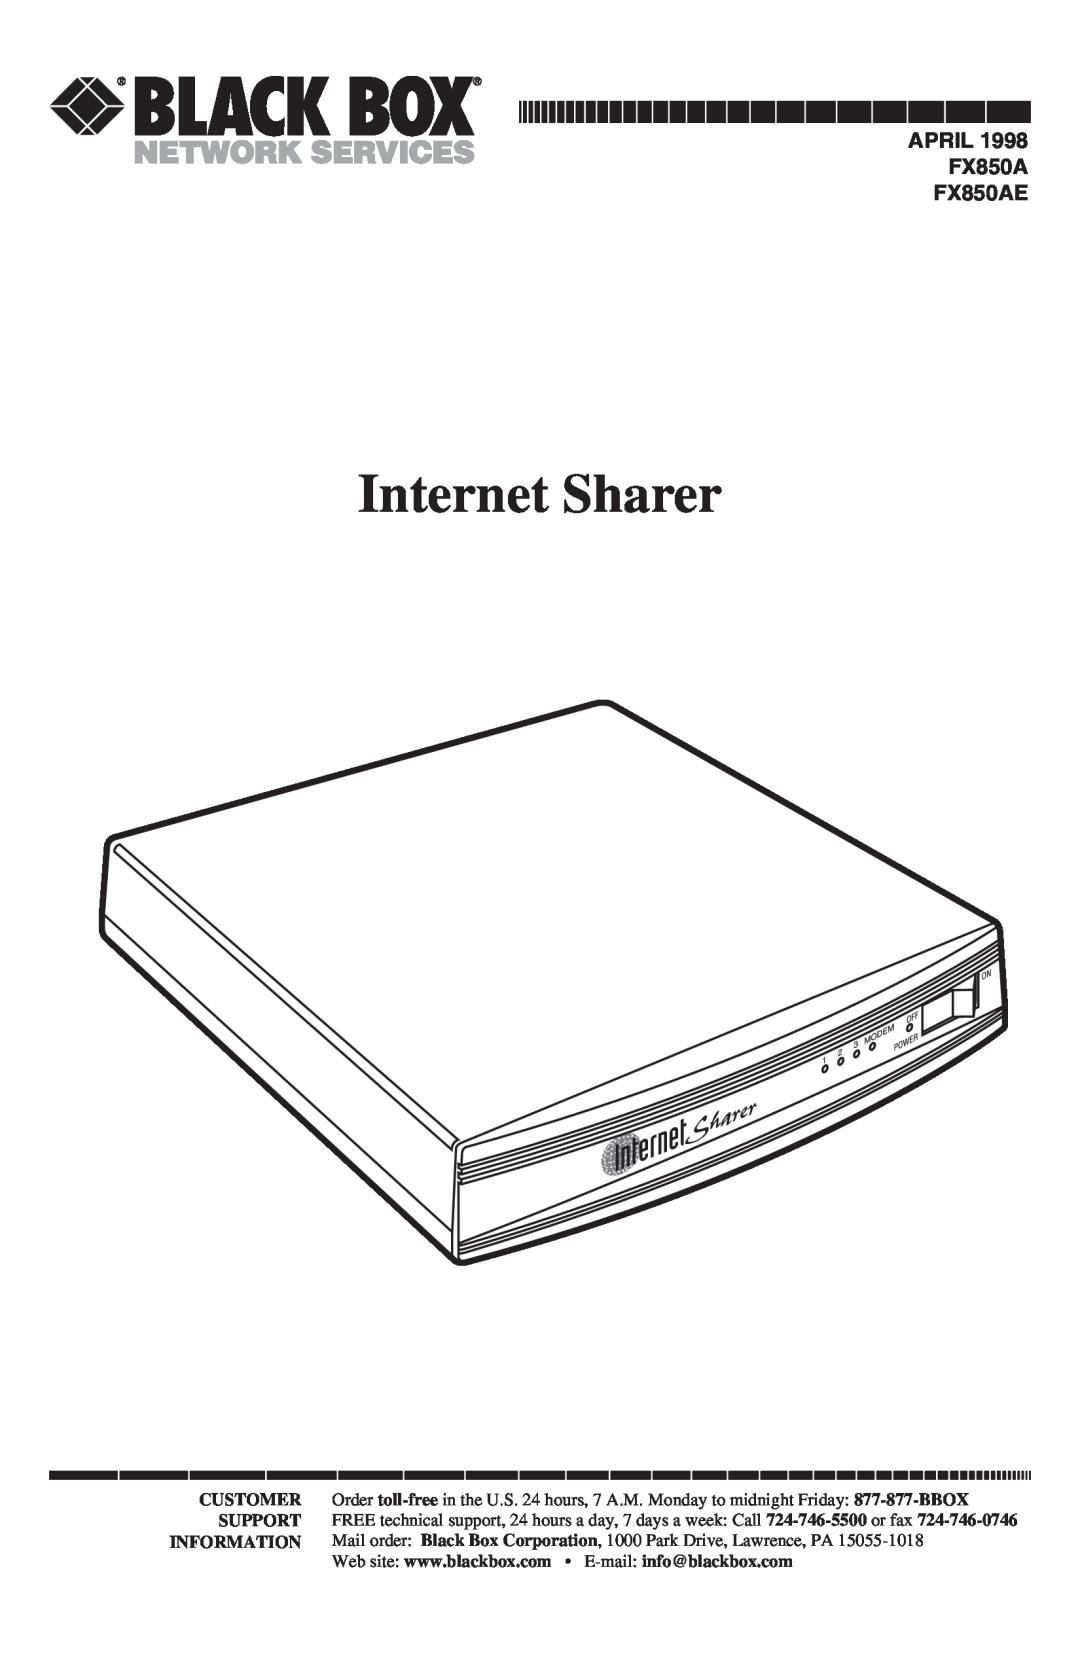 Black Box manual Internet Sharer, APRIL FX850A FX850AE 